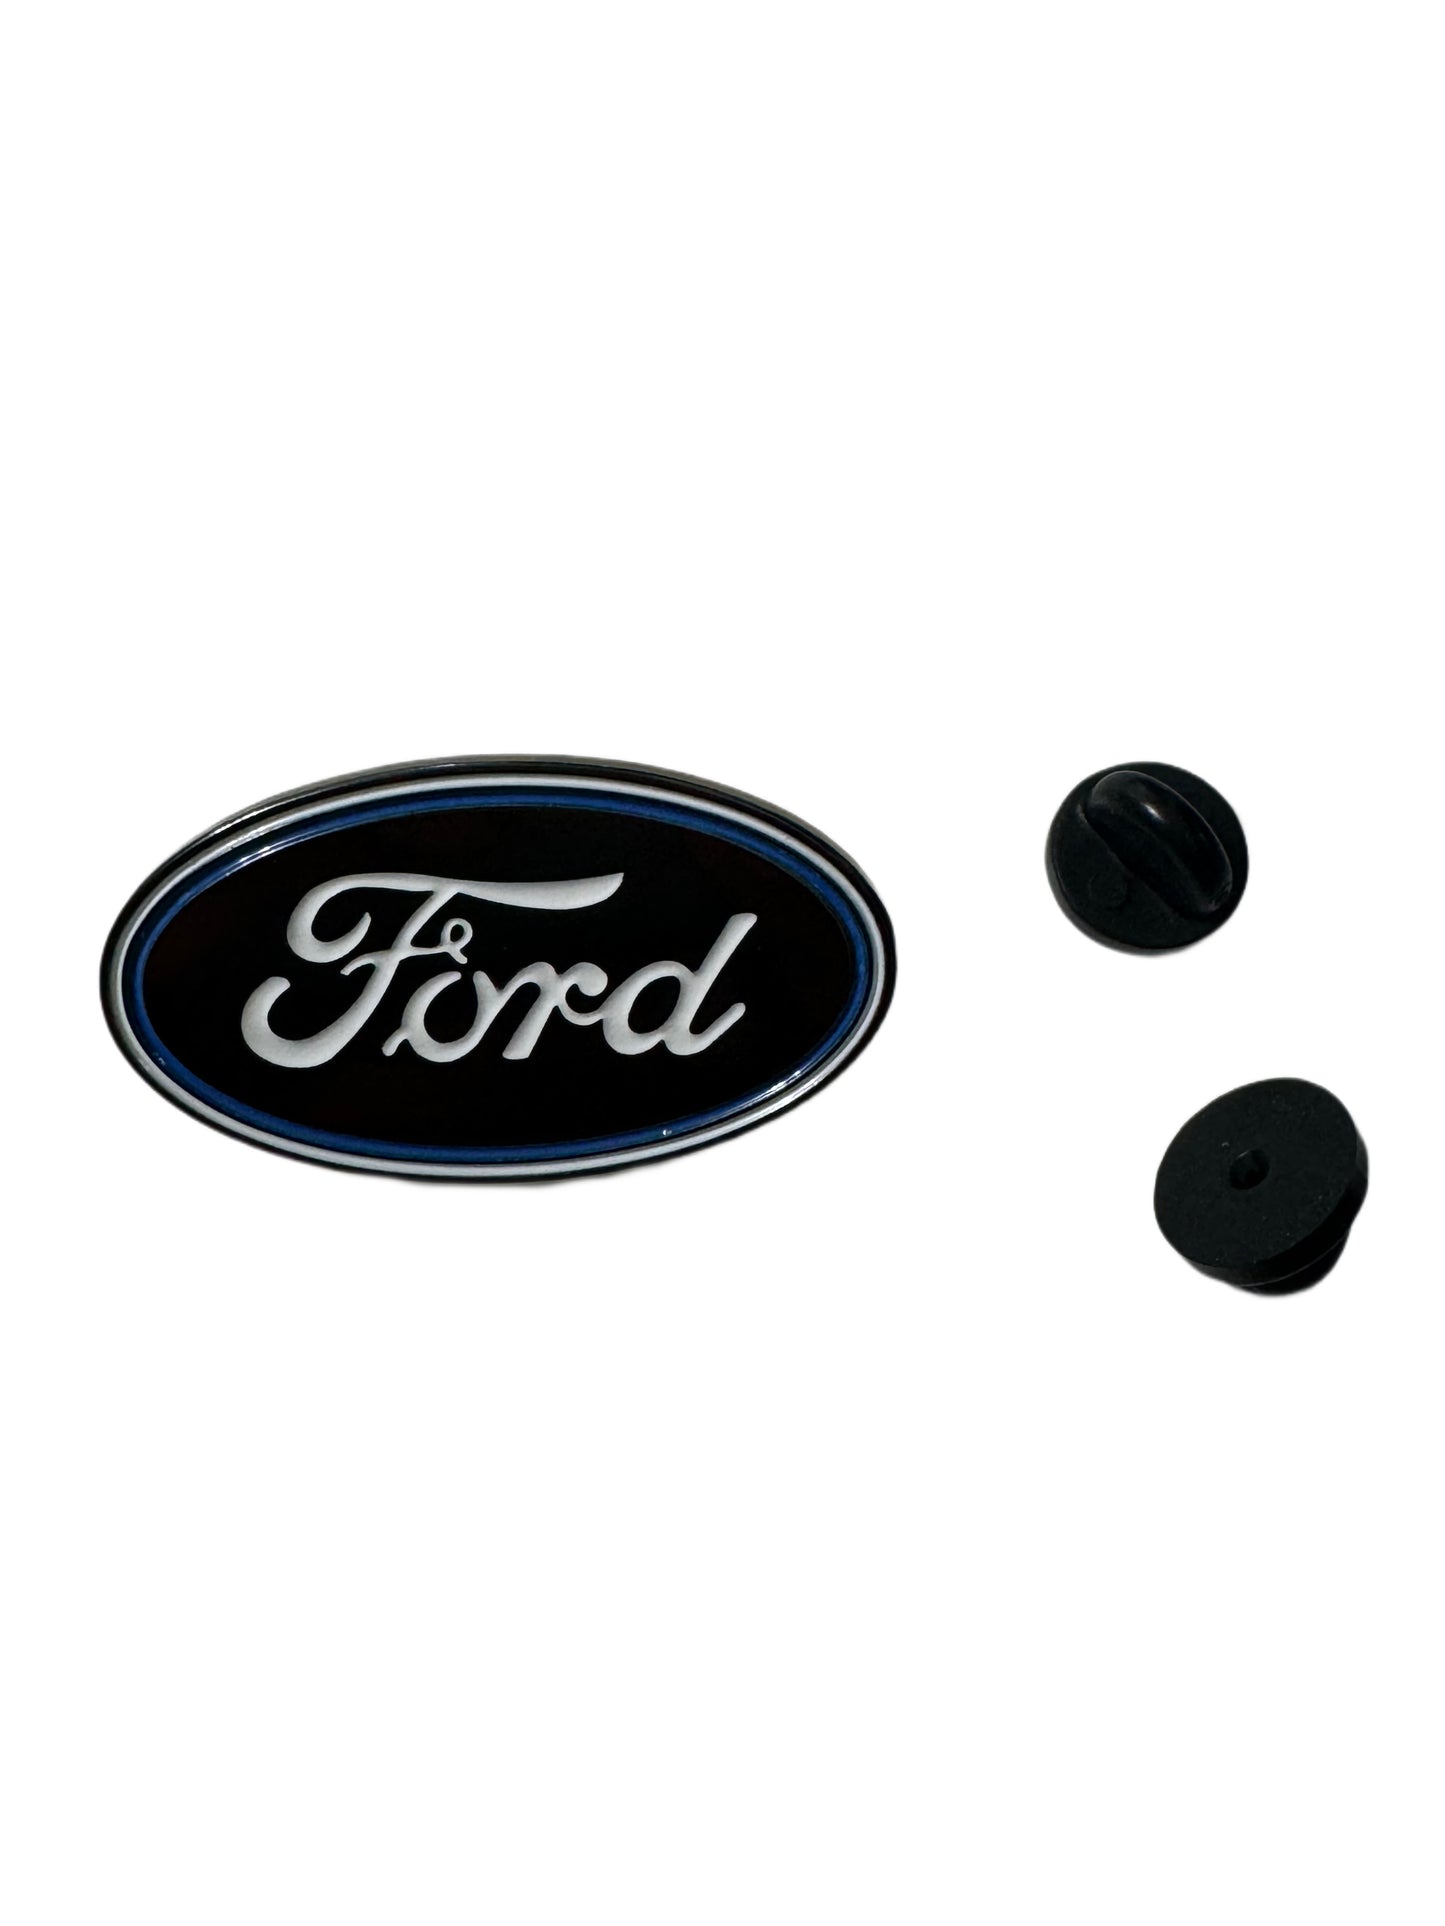 Hat Pins Ford Truck/Car